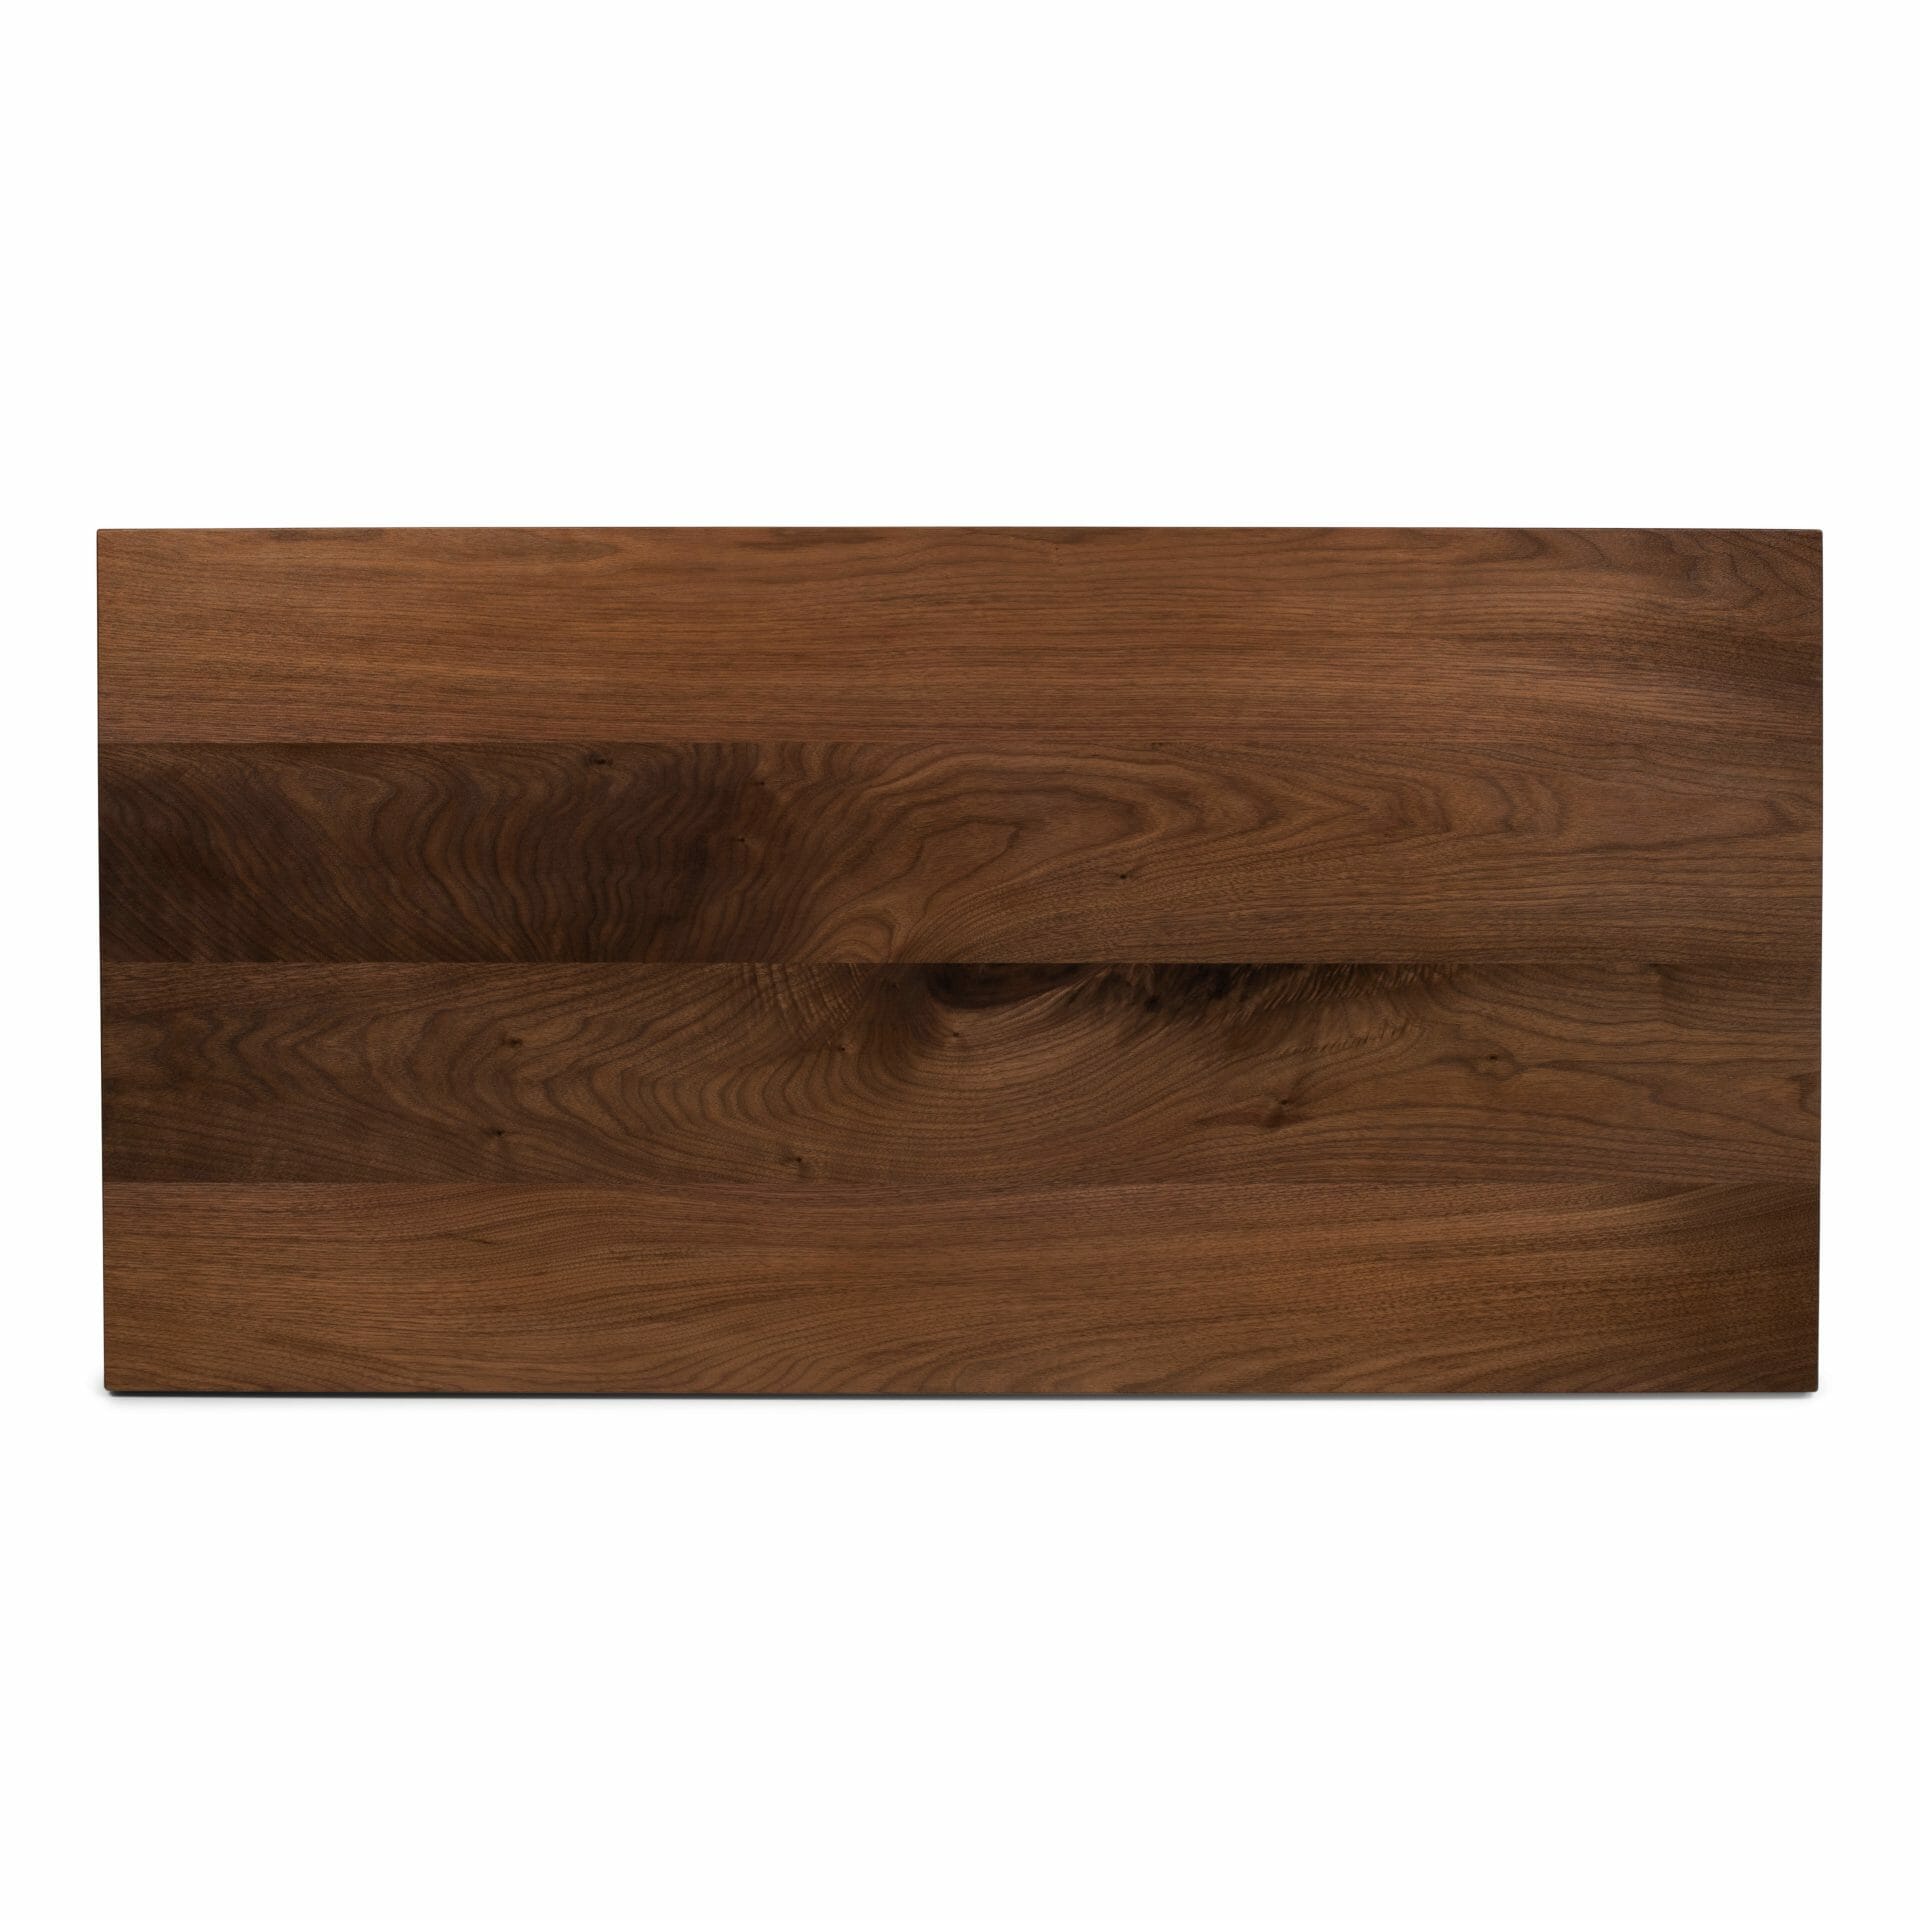 walnut wood countertop table top